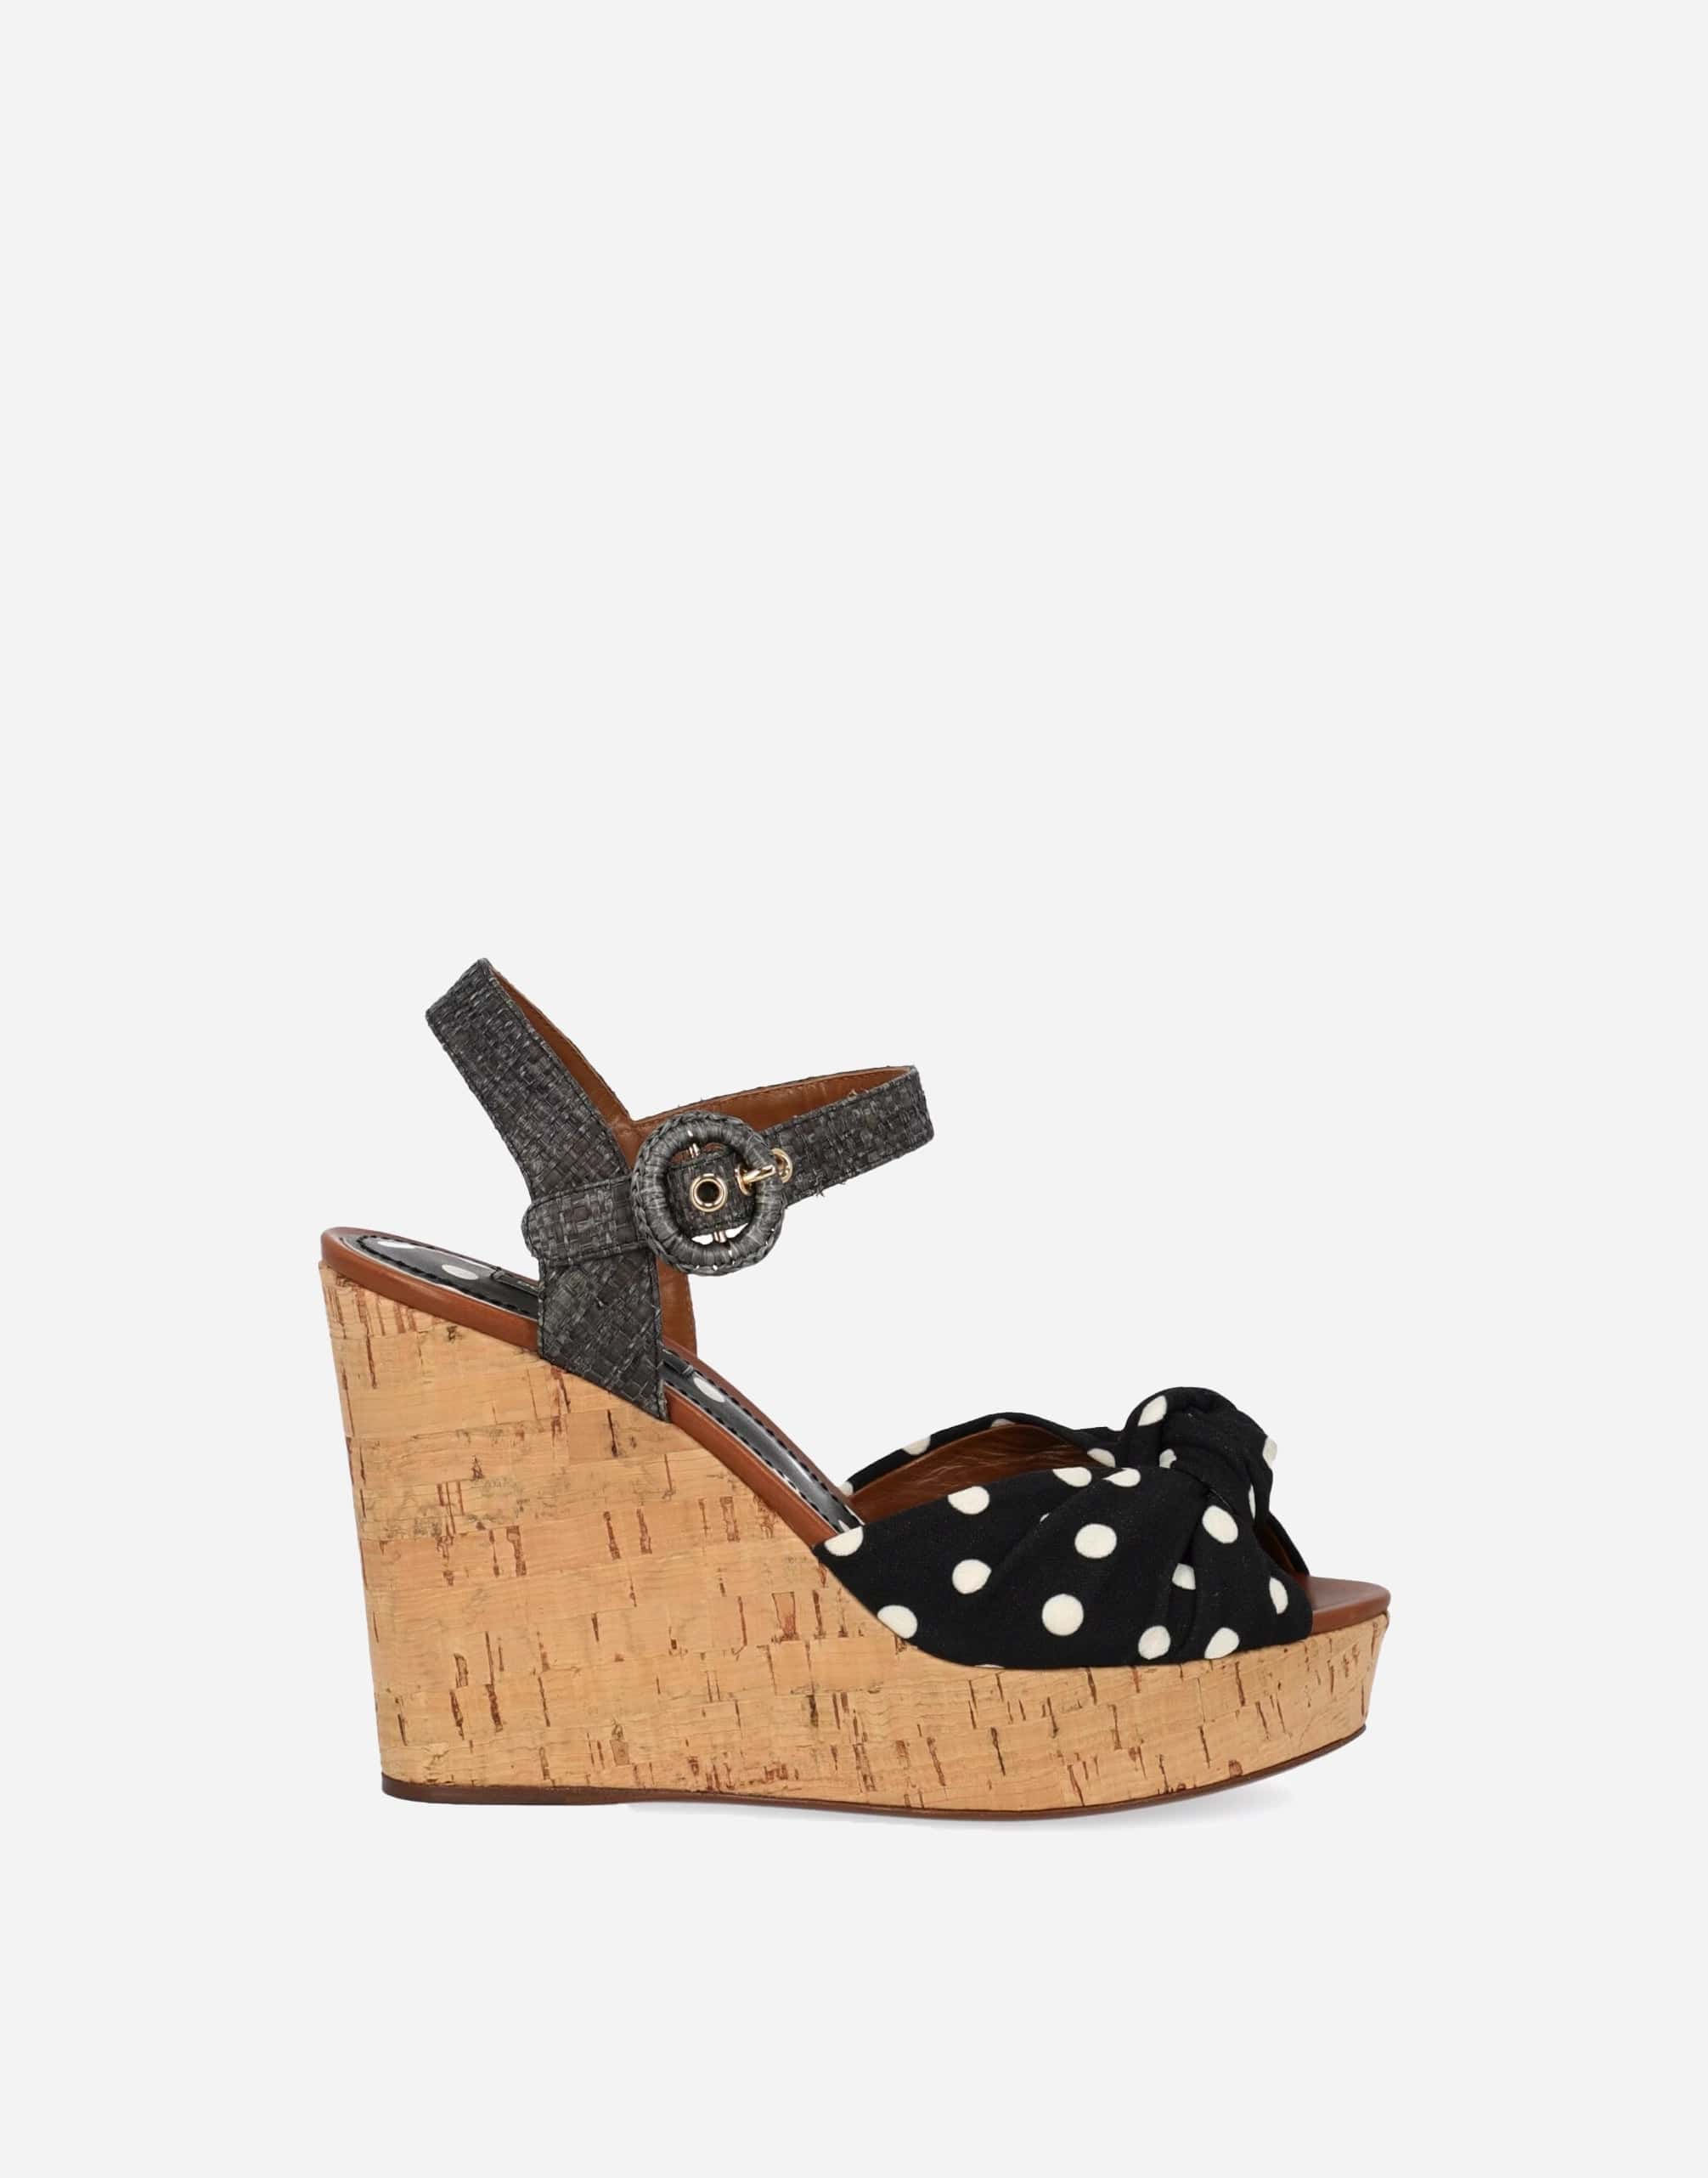 Dolce & Gabbana Black  Wedges Polka Dotted Ankle Strap Shoes Sandals